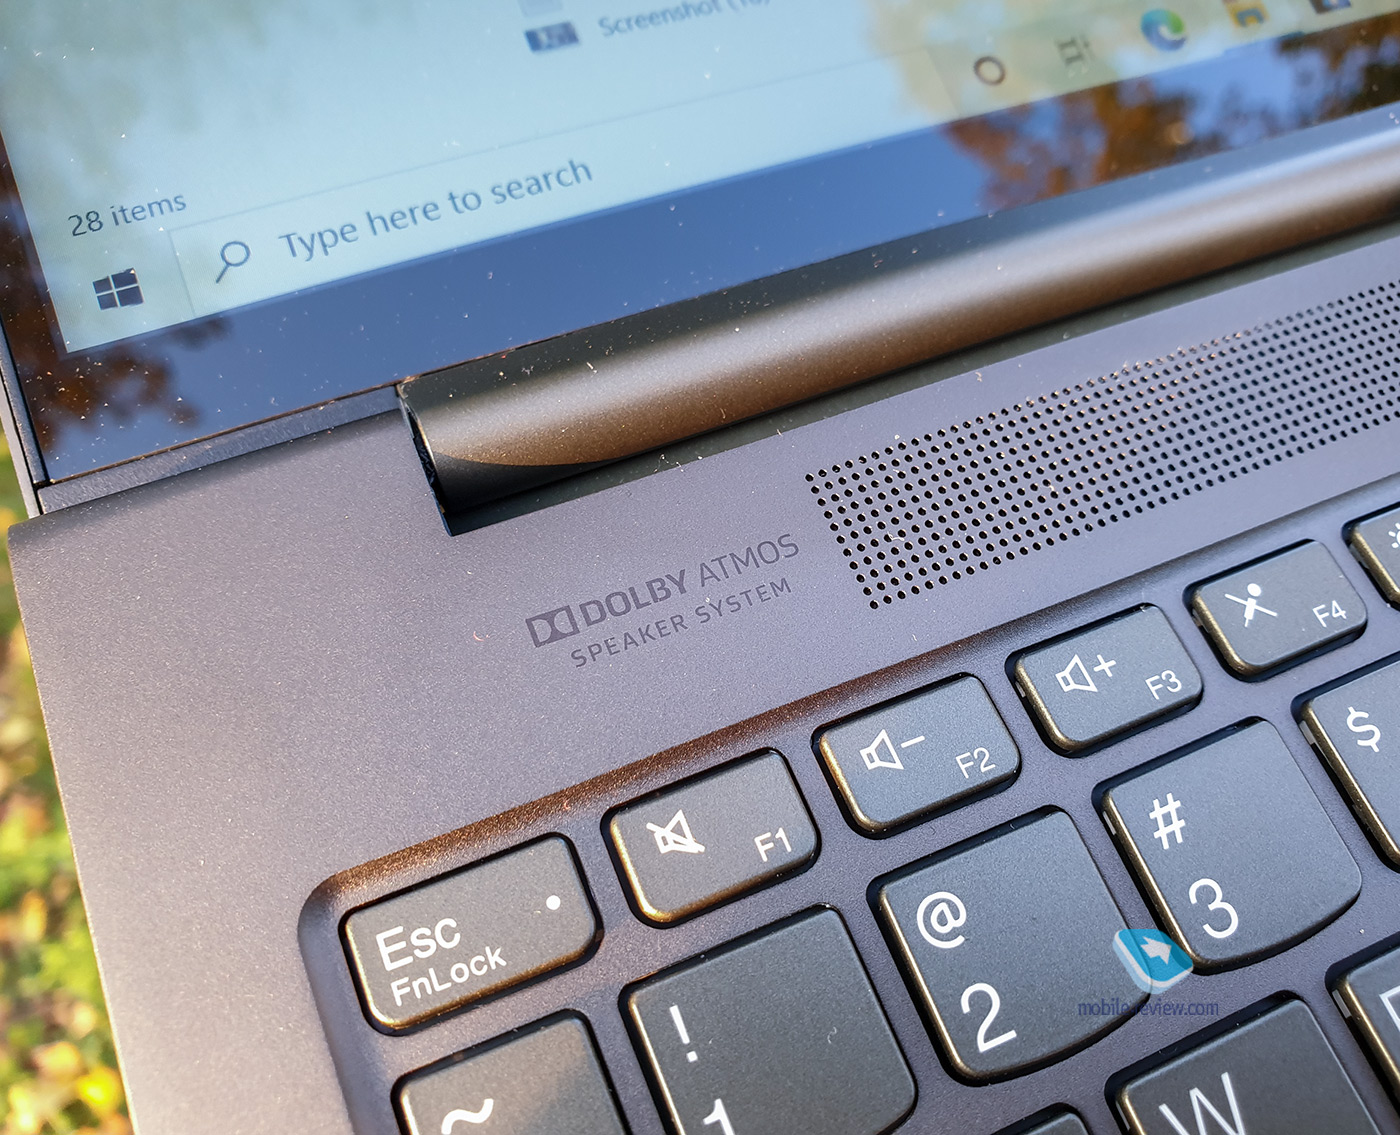 Lenovo Yoga 7 Creator: Affordable Laptop Designed for Creative